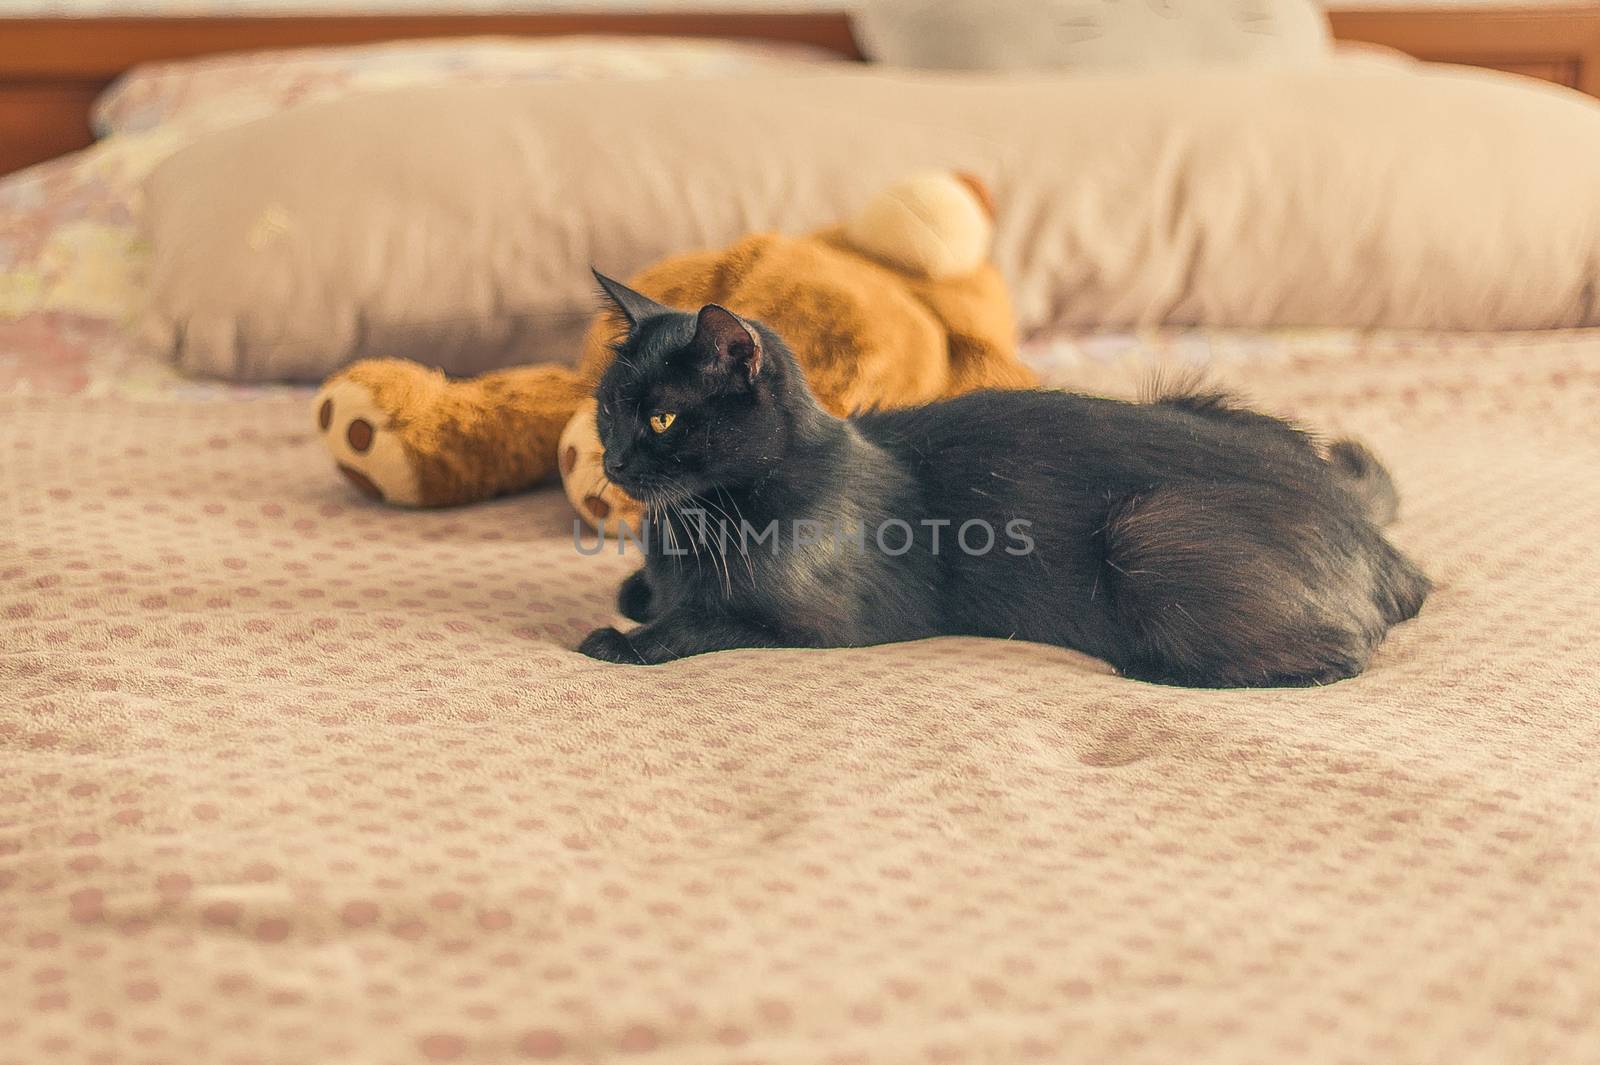 black cat rest on a bed near a teddy bear